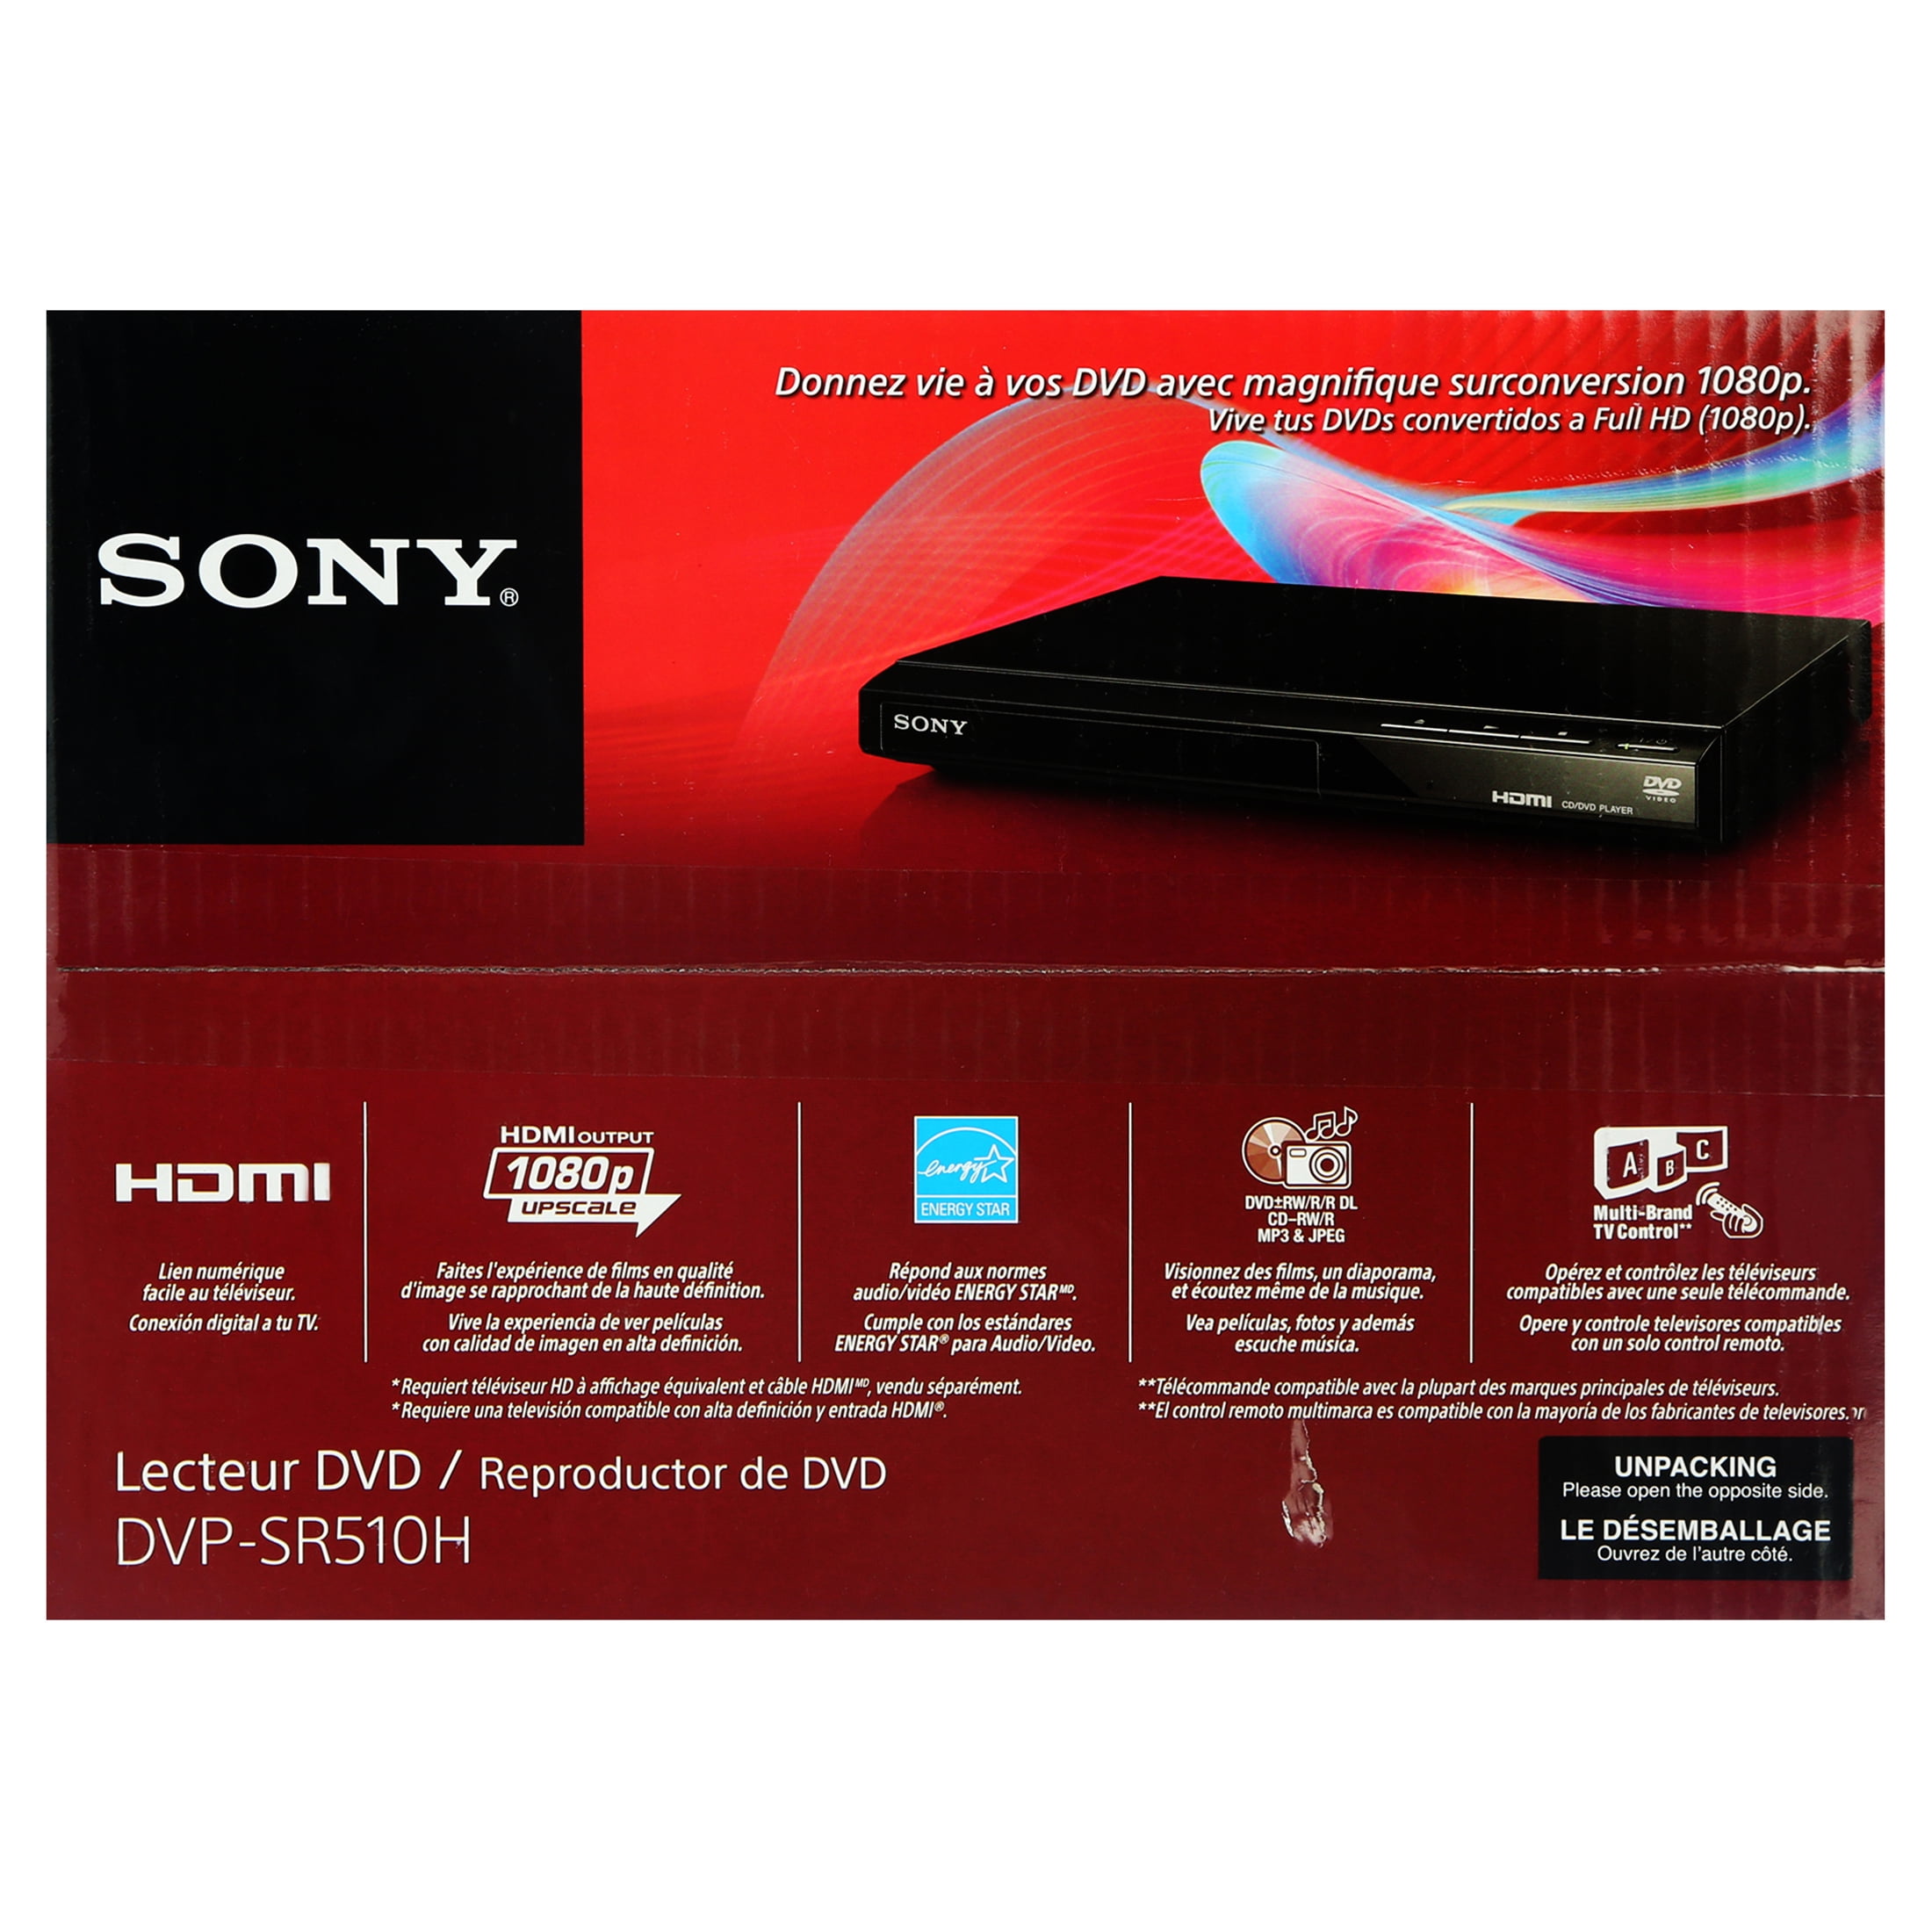 Sony 1080p Upscaling Player HDMI DVD DVP-SR510H 